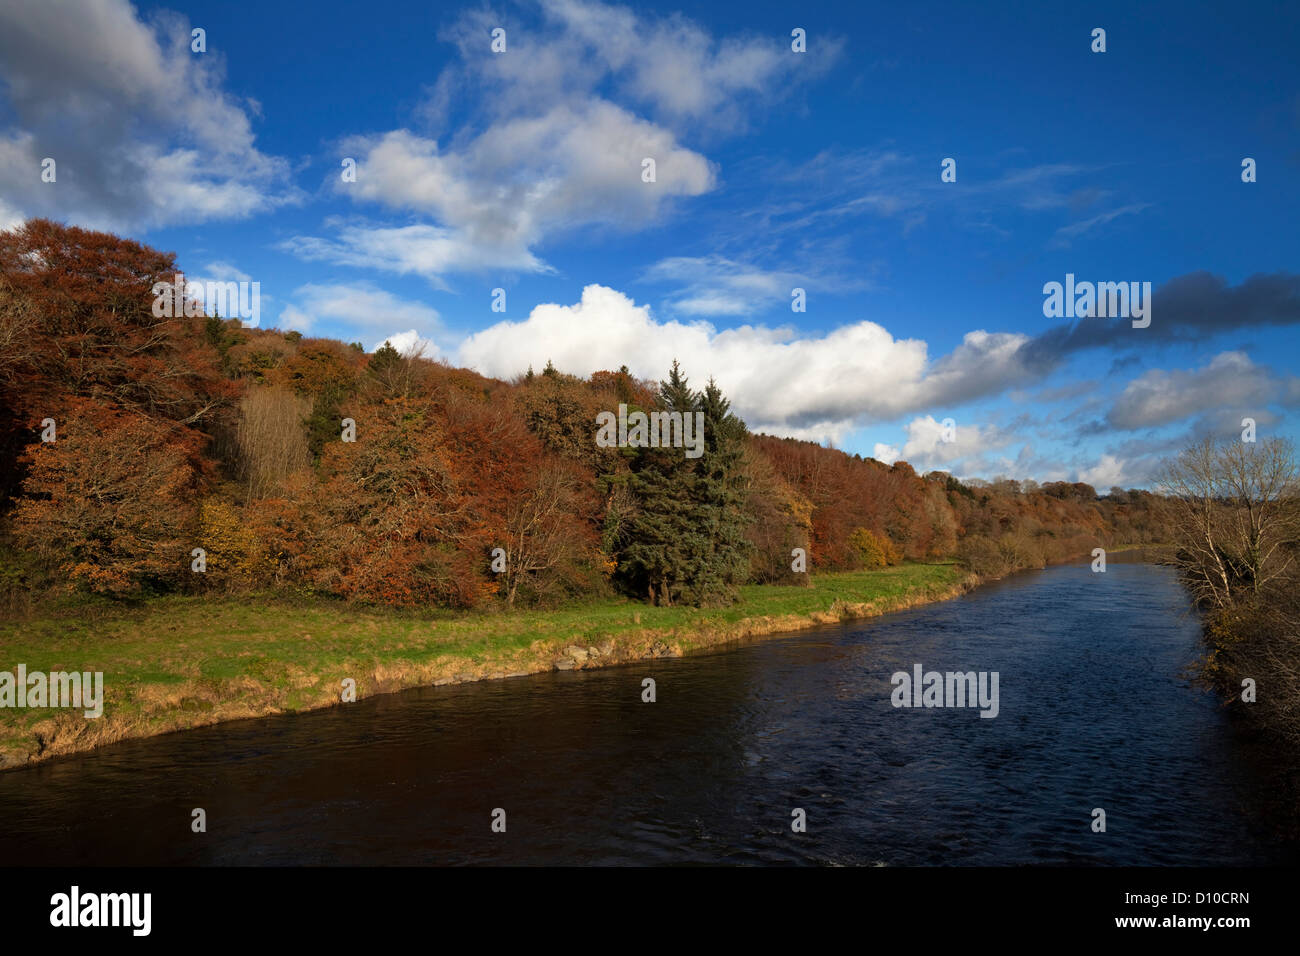 The Banks of the River Nore, from the Kilmacshane Bridge, County Kilkenny, Ireland Stock Photo